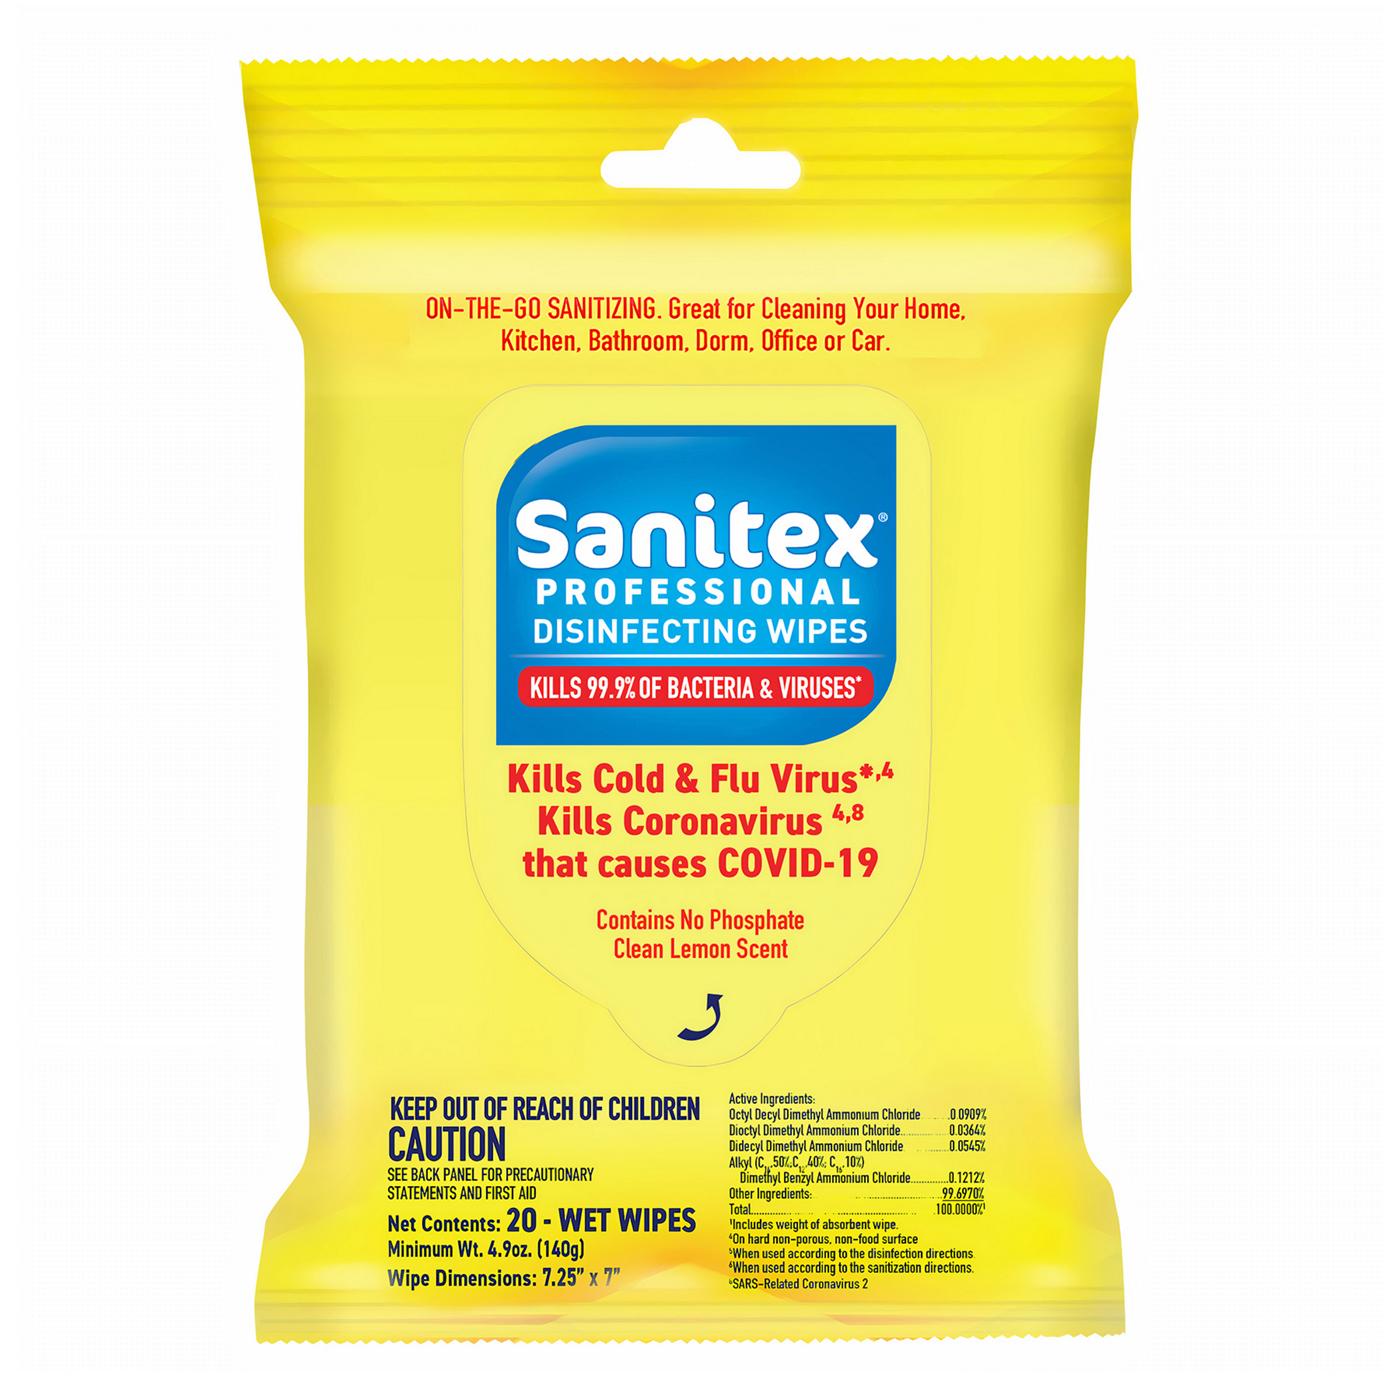 Sanitex Disinfecting Wet Wipes; image 1 of 2